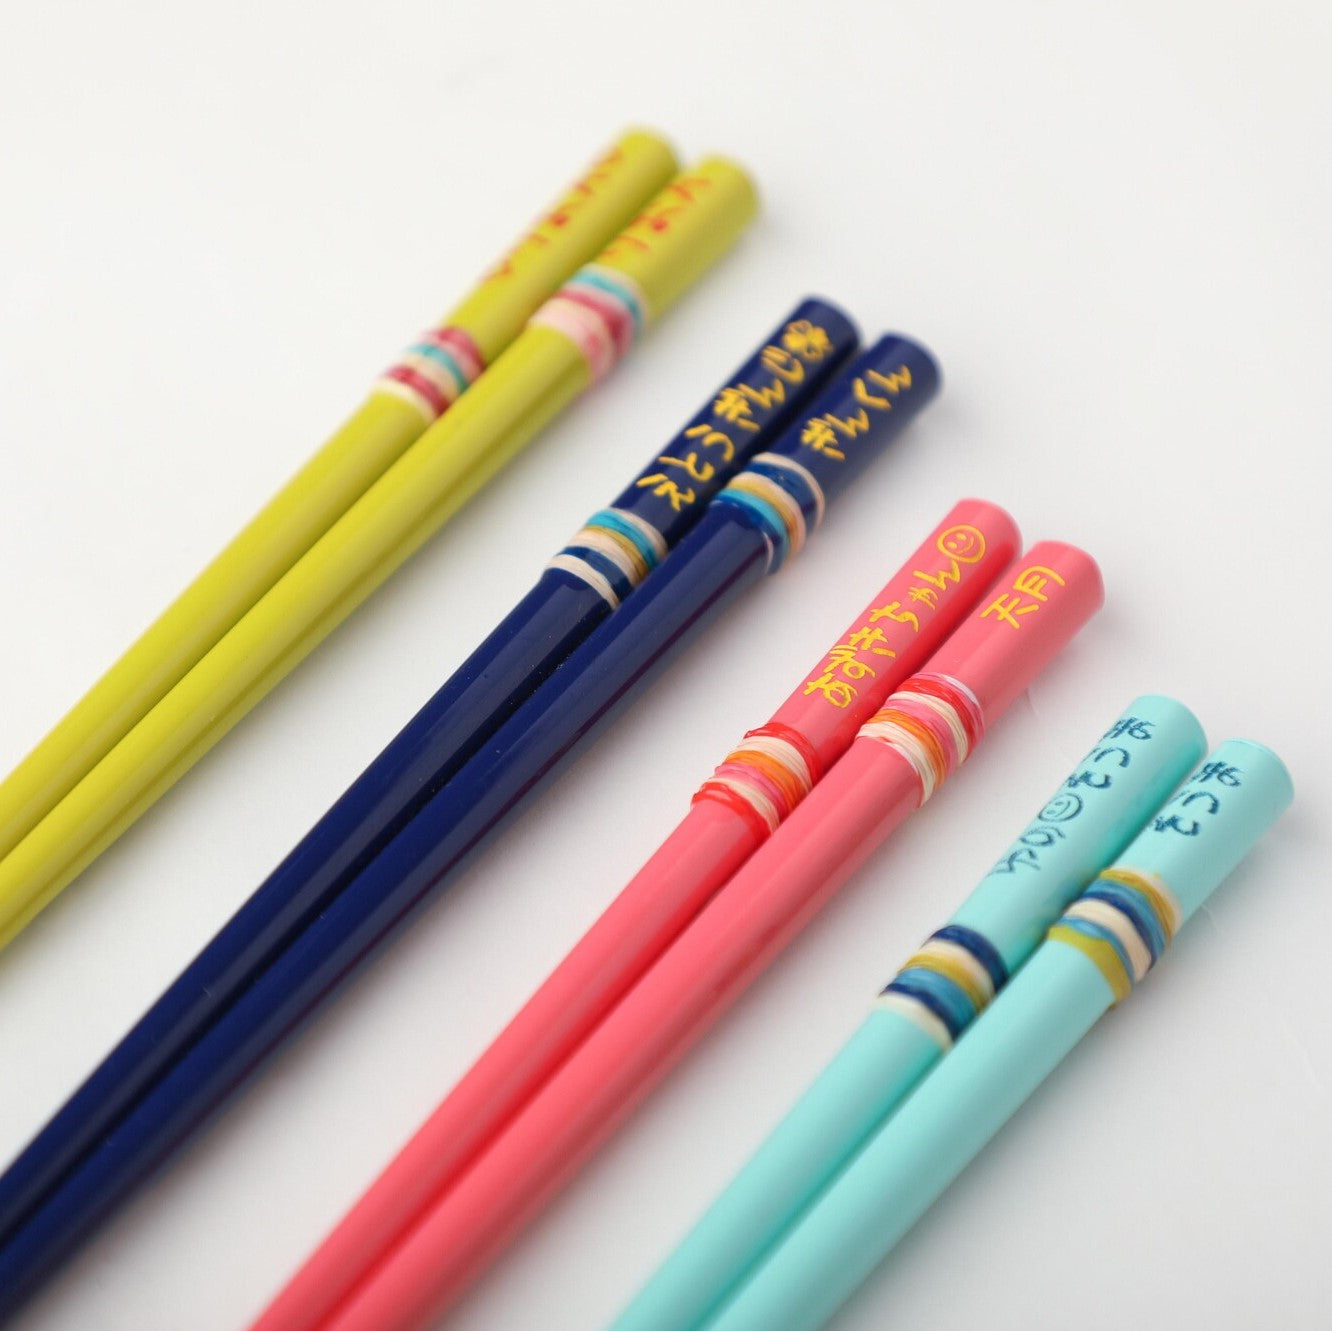 Hula hoop kids Japanese chopsticks yellow blue pink sky blue - SINGLE PAIR